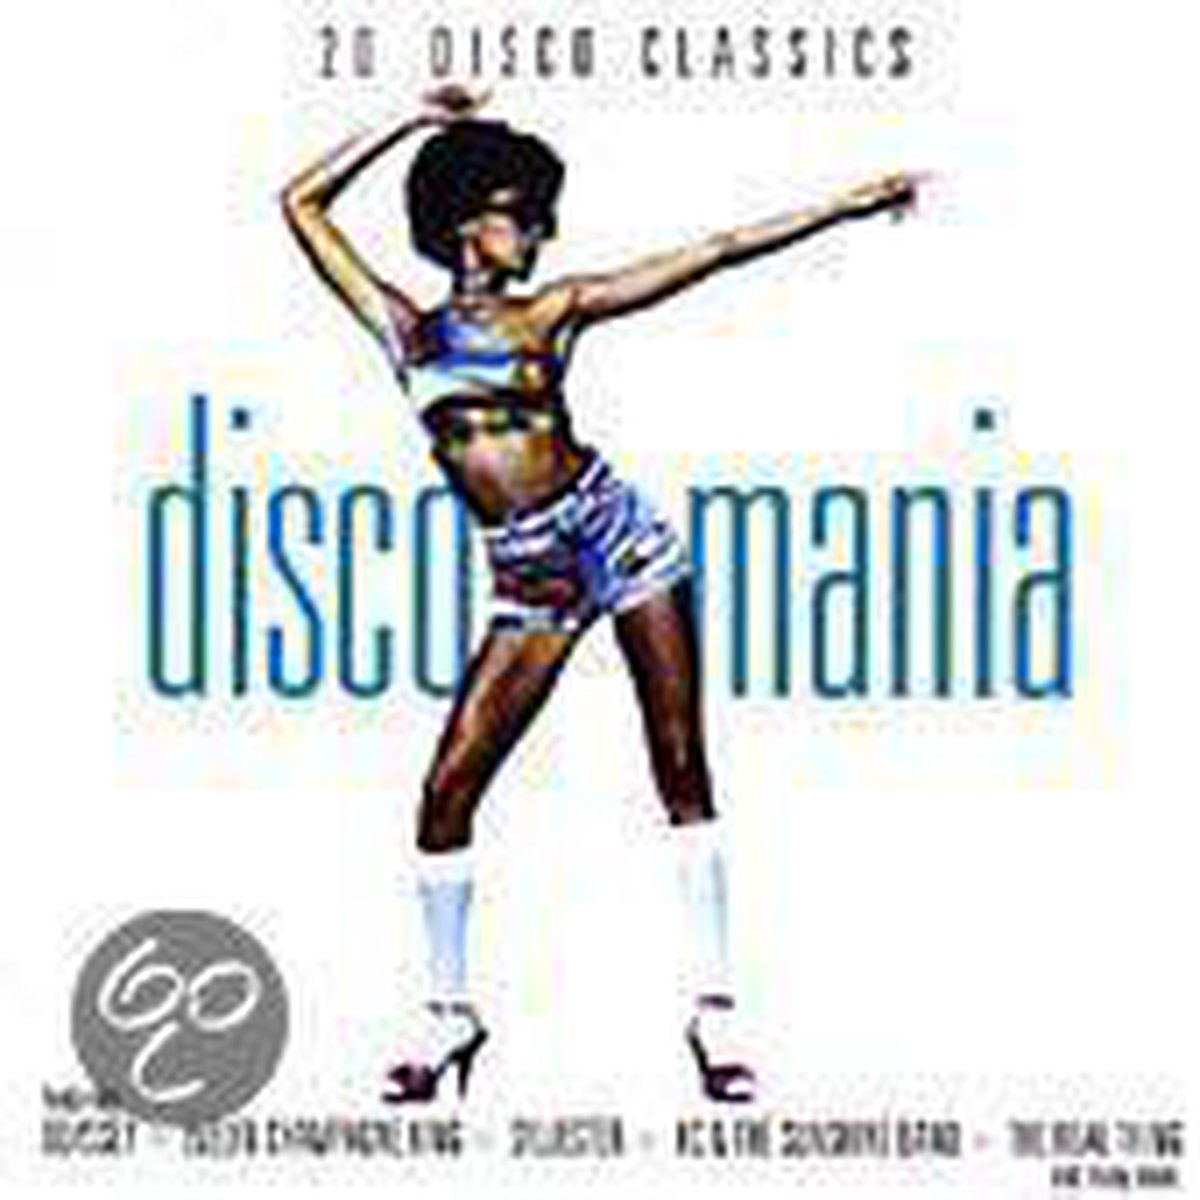 Disco Mania - various artists